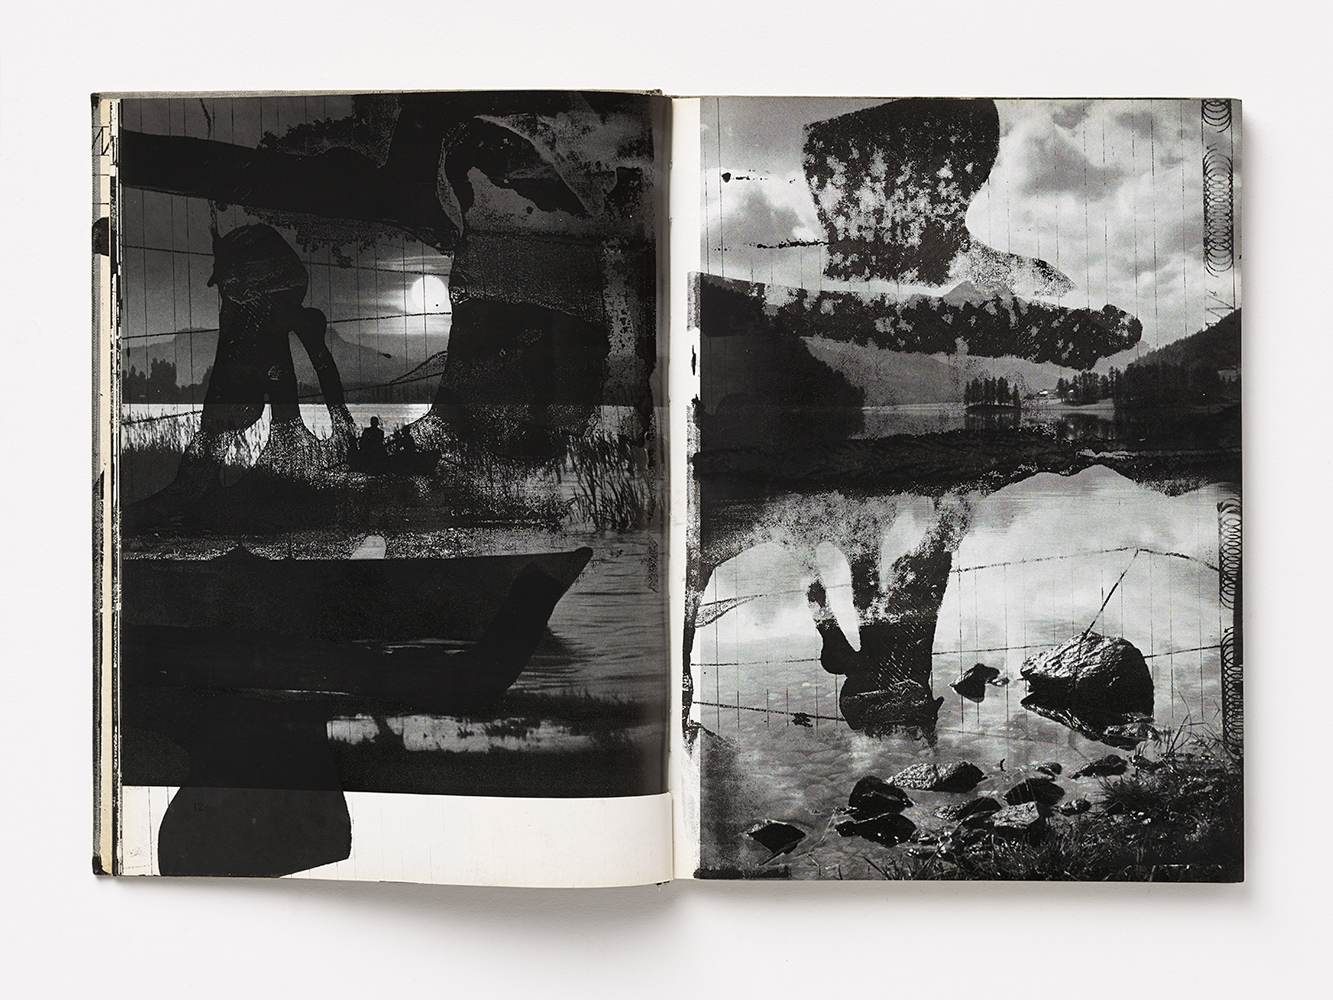 Arturo Herrera, Set #1 Flüsse und Seen, 2012, Silkscreen and mixed media on paper, 26,8 x 20,2 x 1,2 cm, 3 of 12